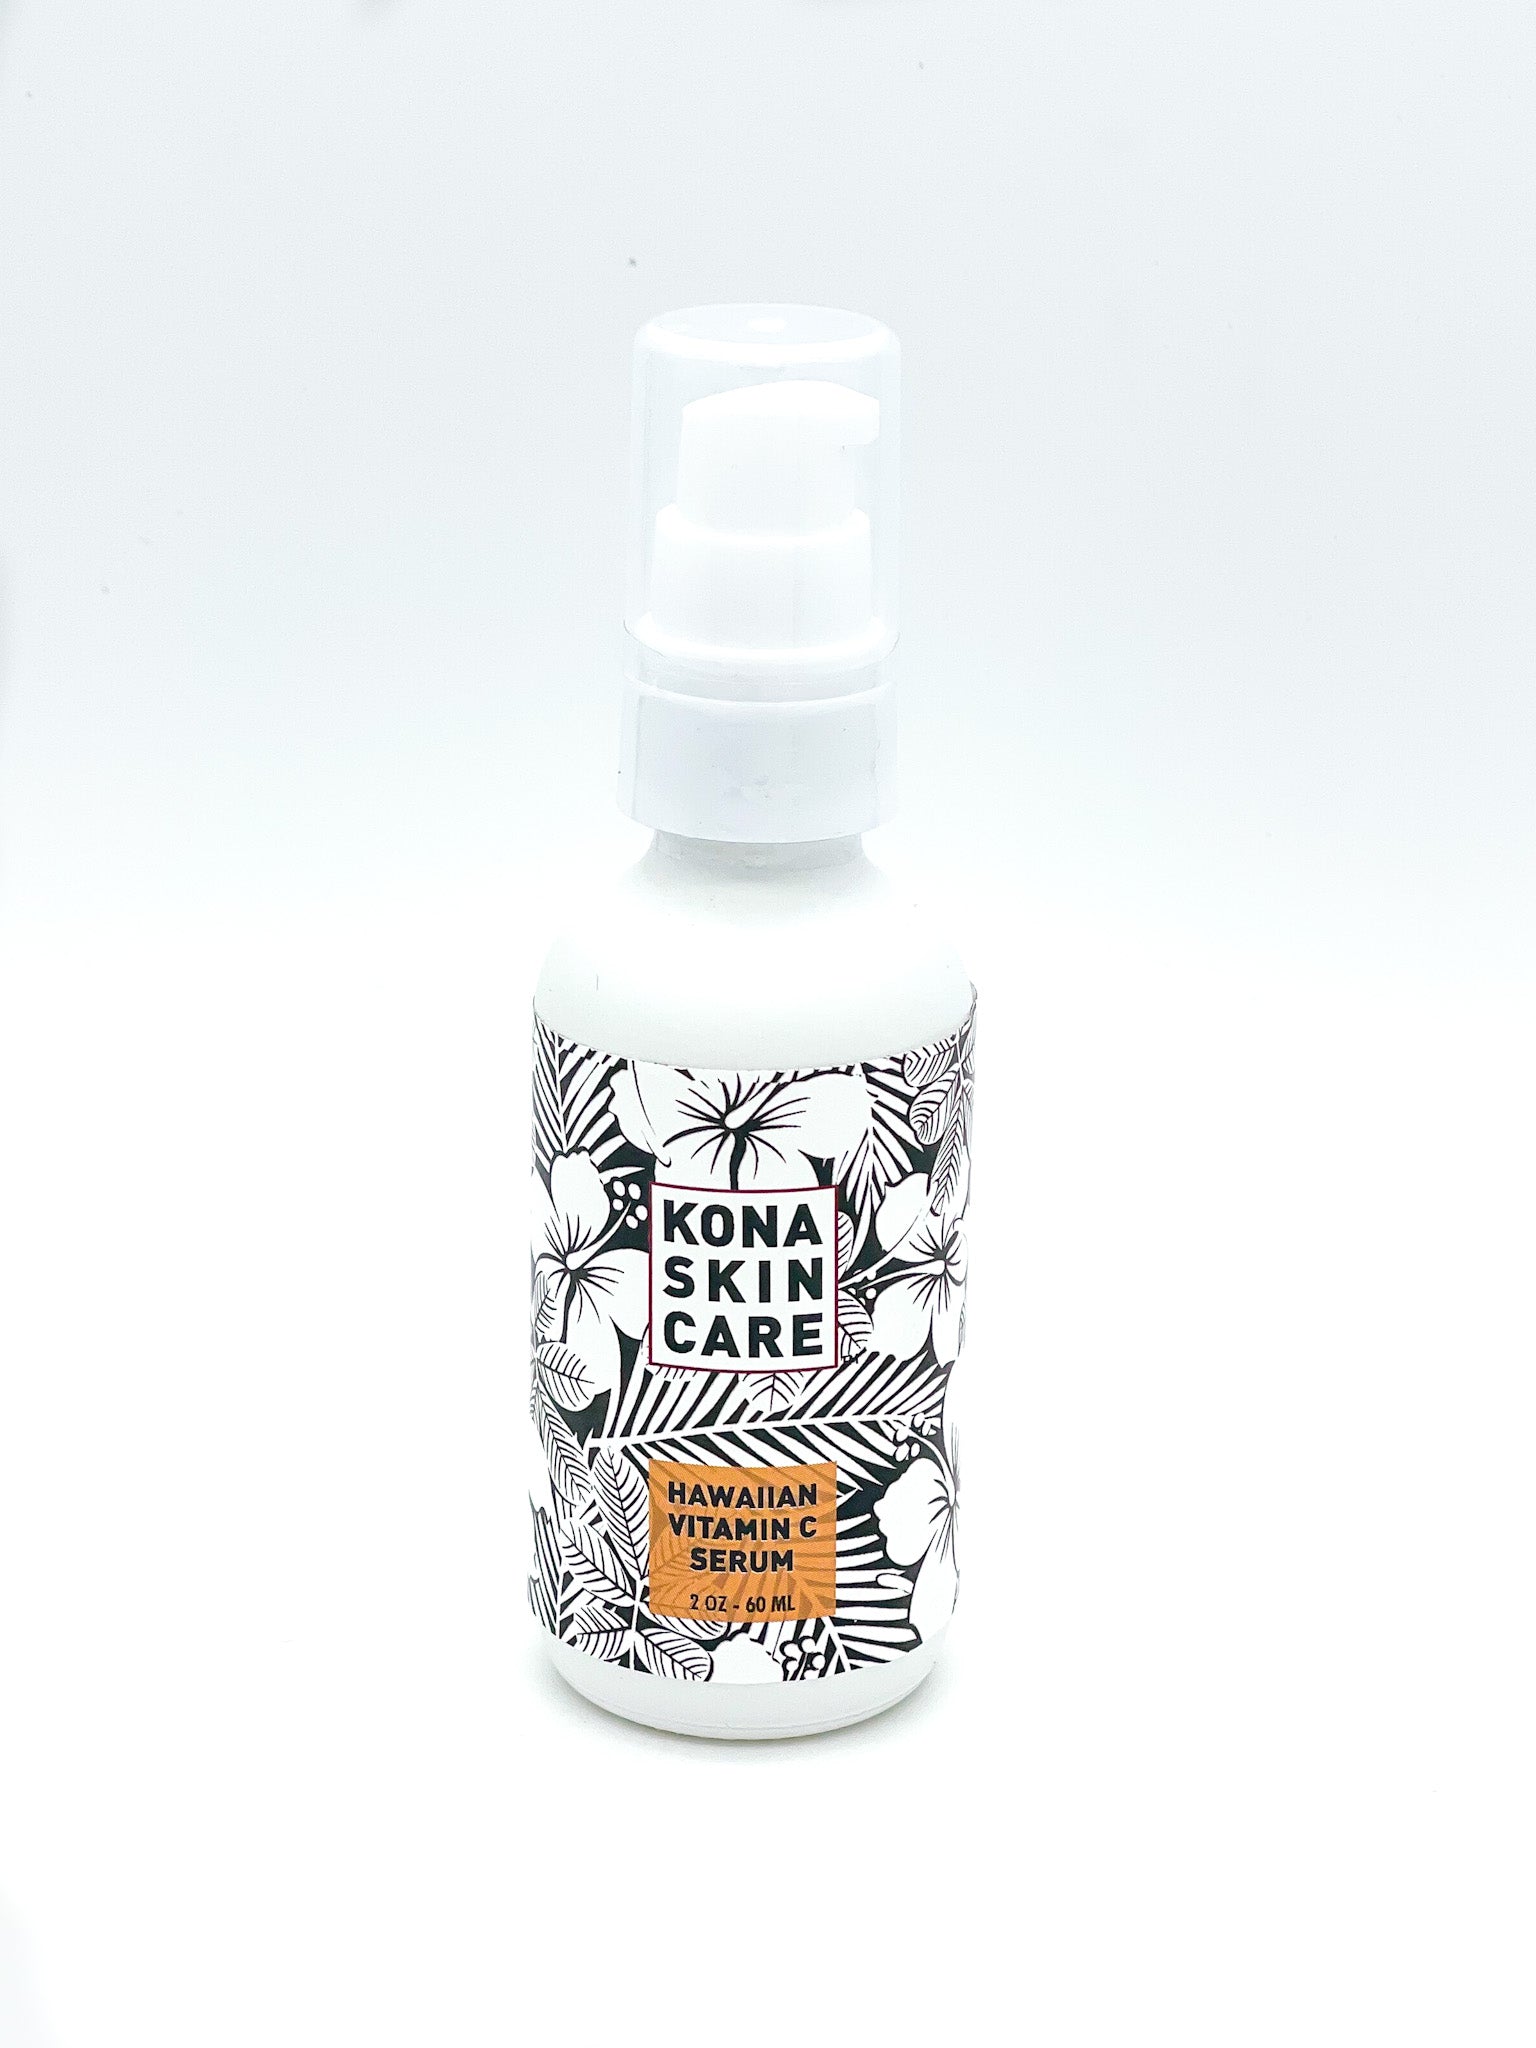 Kona Skincare Hawaiian Vitamin C Serum 2 oz bottle